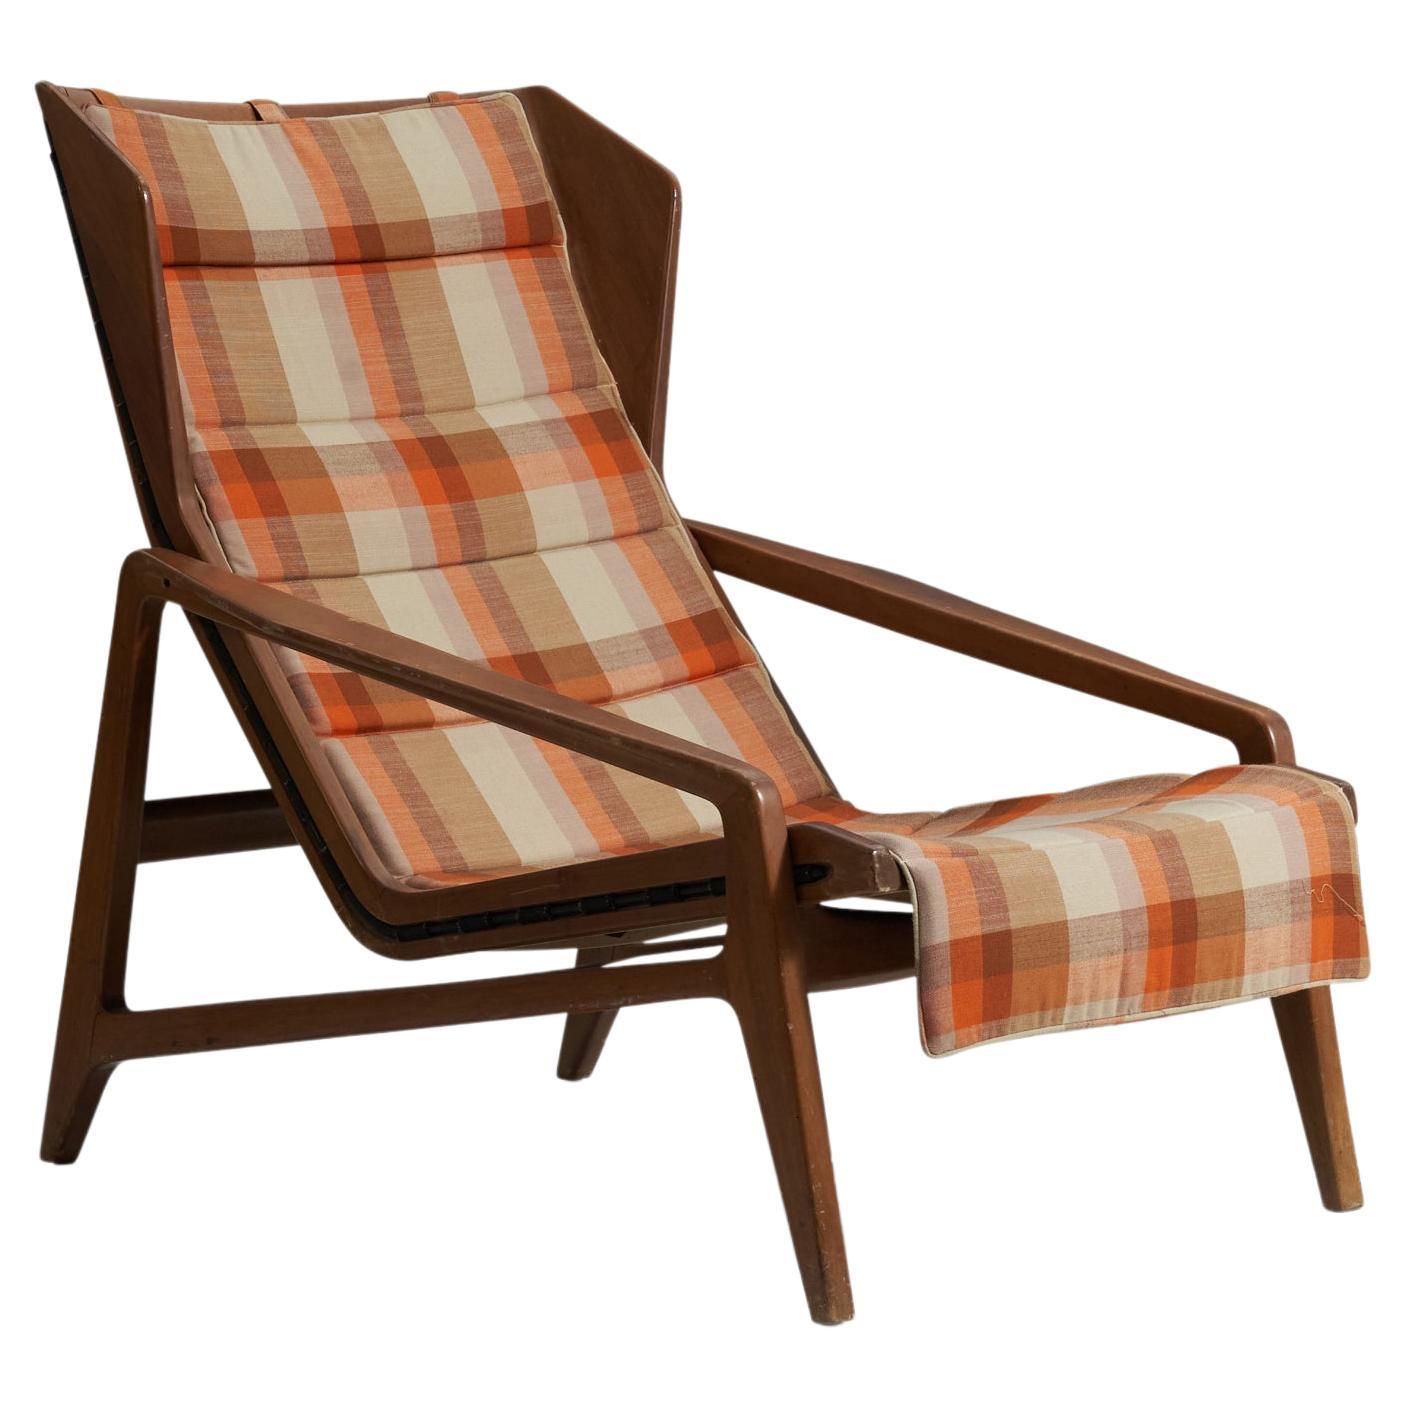 Gio Ponti, Rare "811" Lounge Chair, Fabric, Walnut, Rubber, Cassina, c. 1956